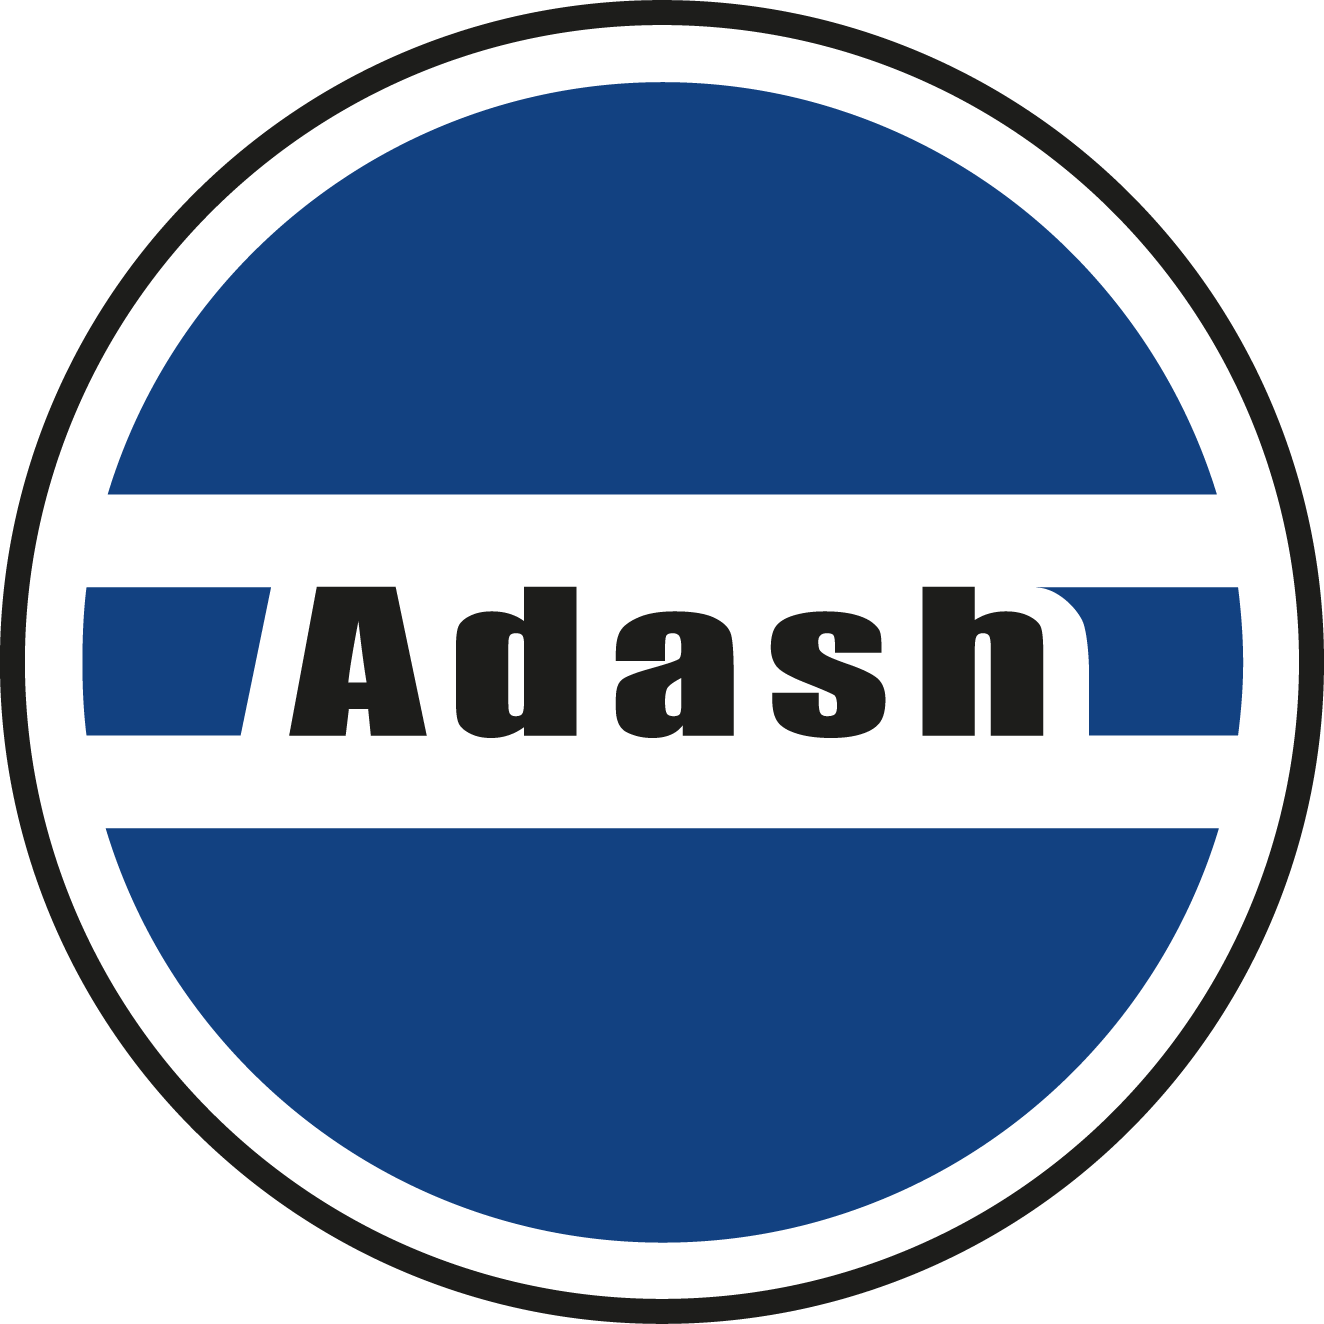 Adash - vibration meters, vibration analyzers, data collectors